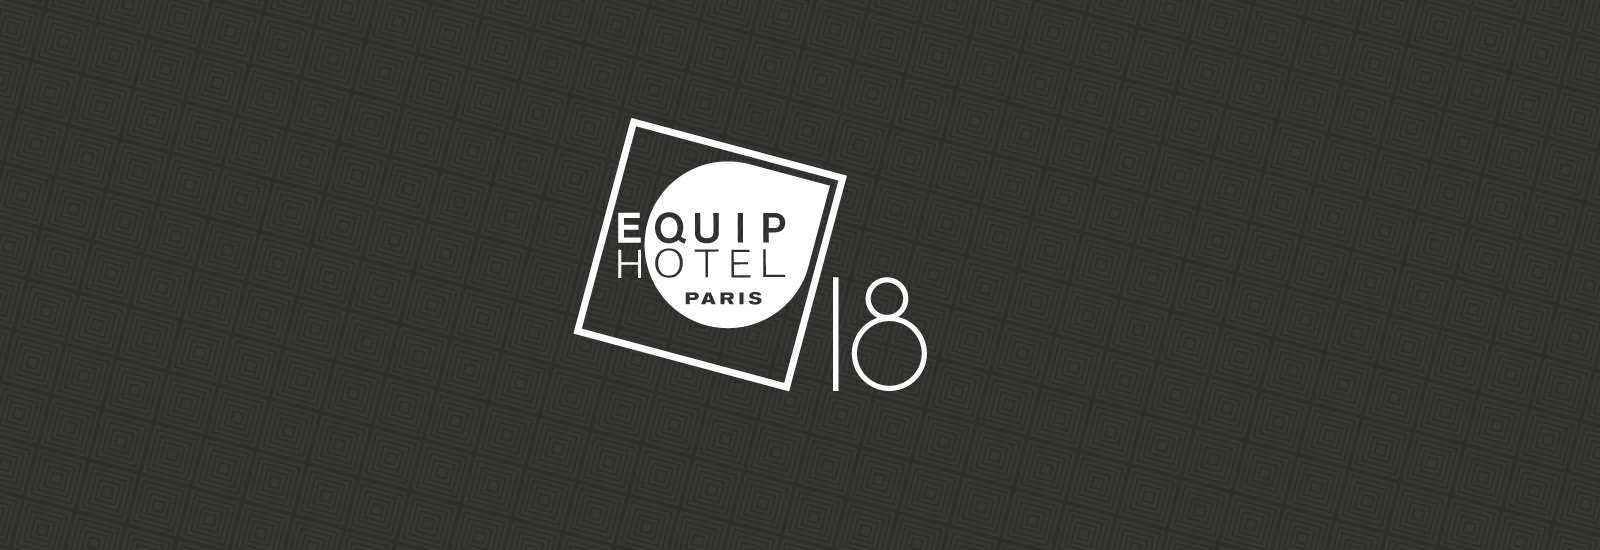 Salon Equip Hotel 2018